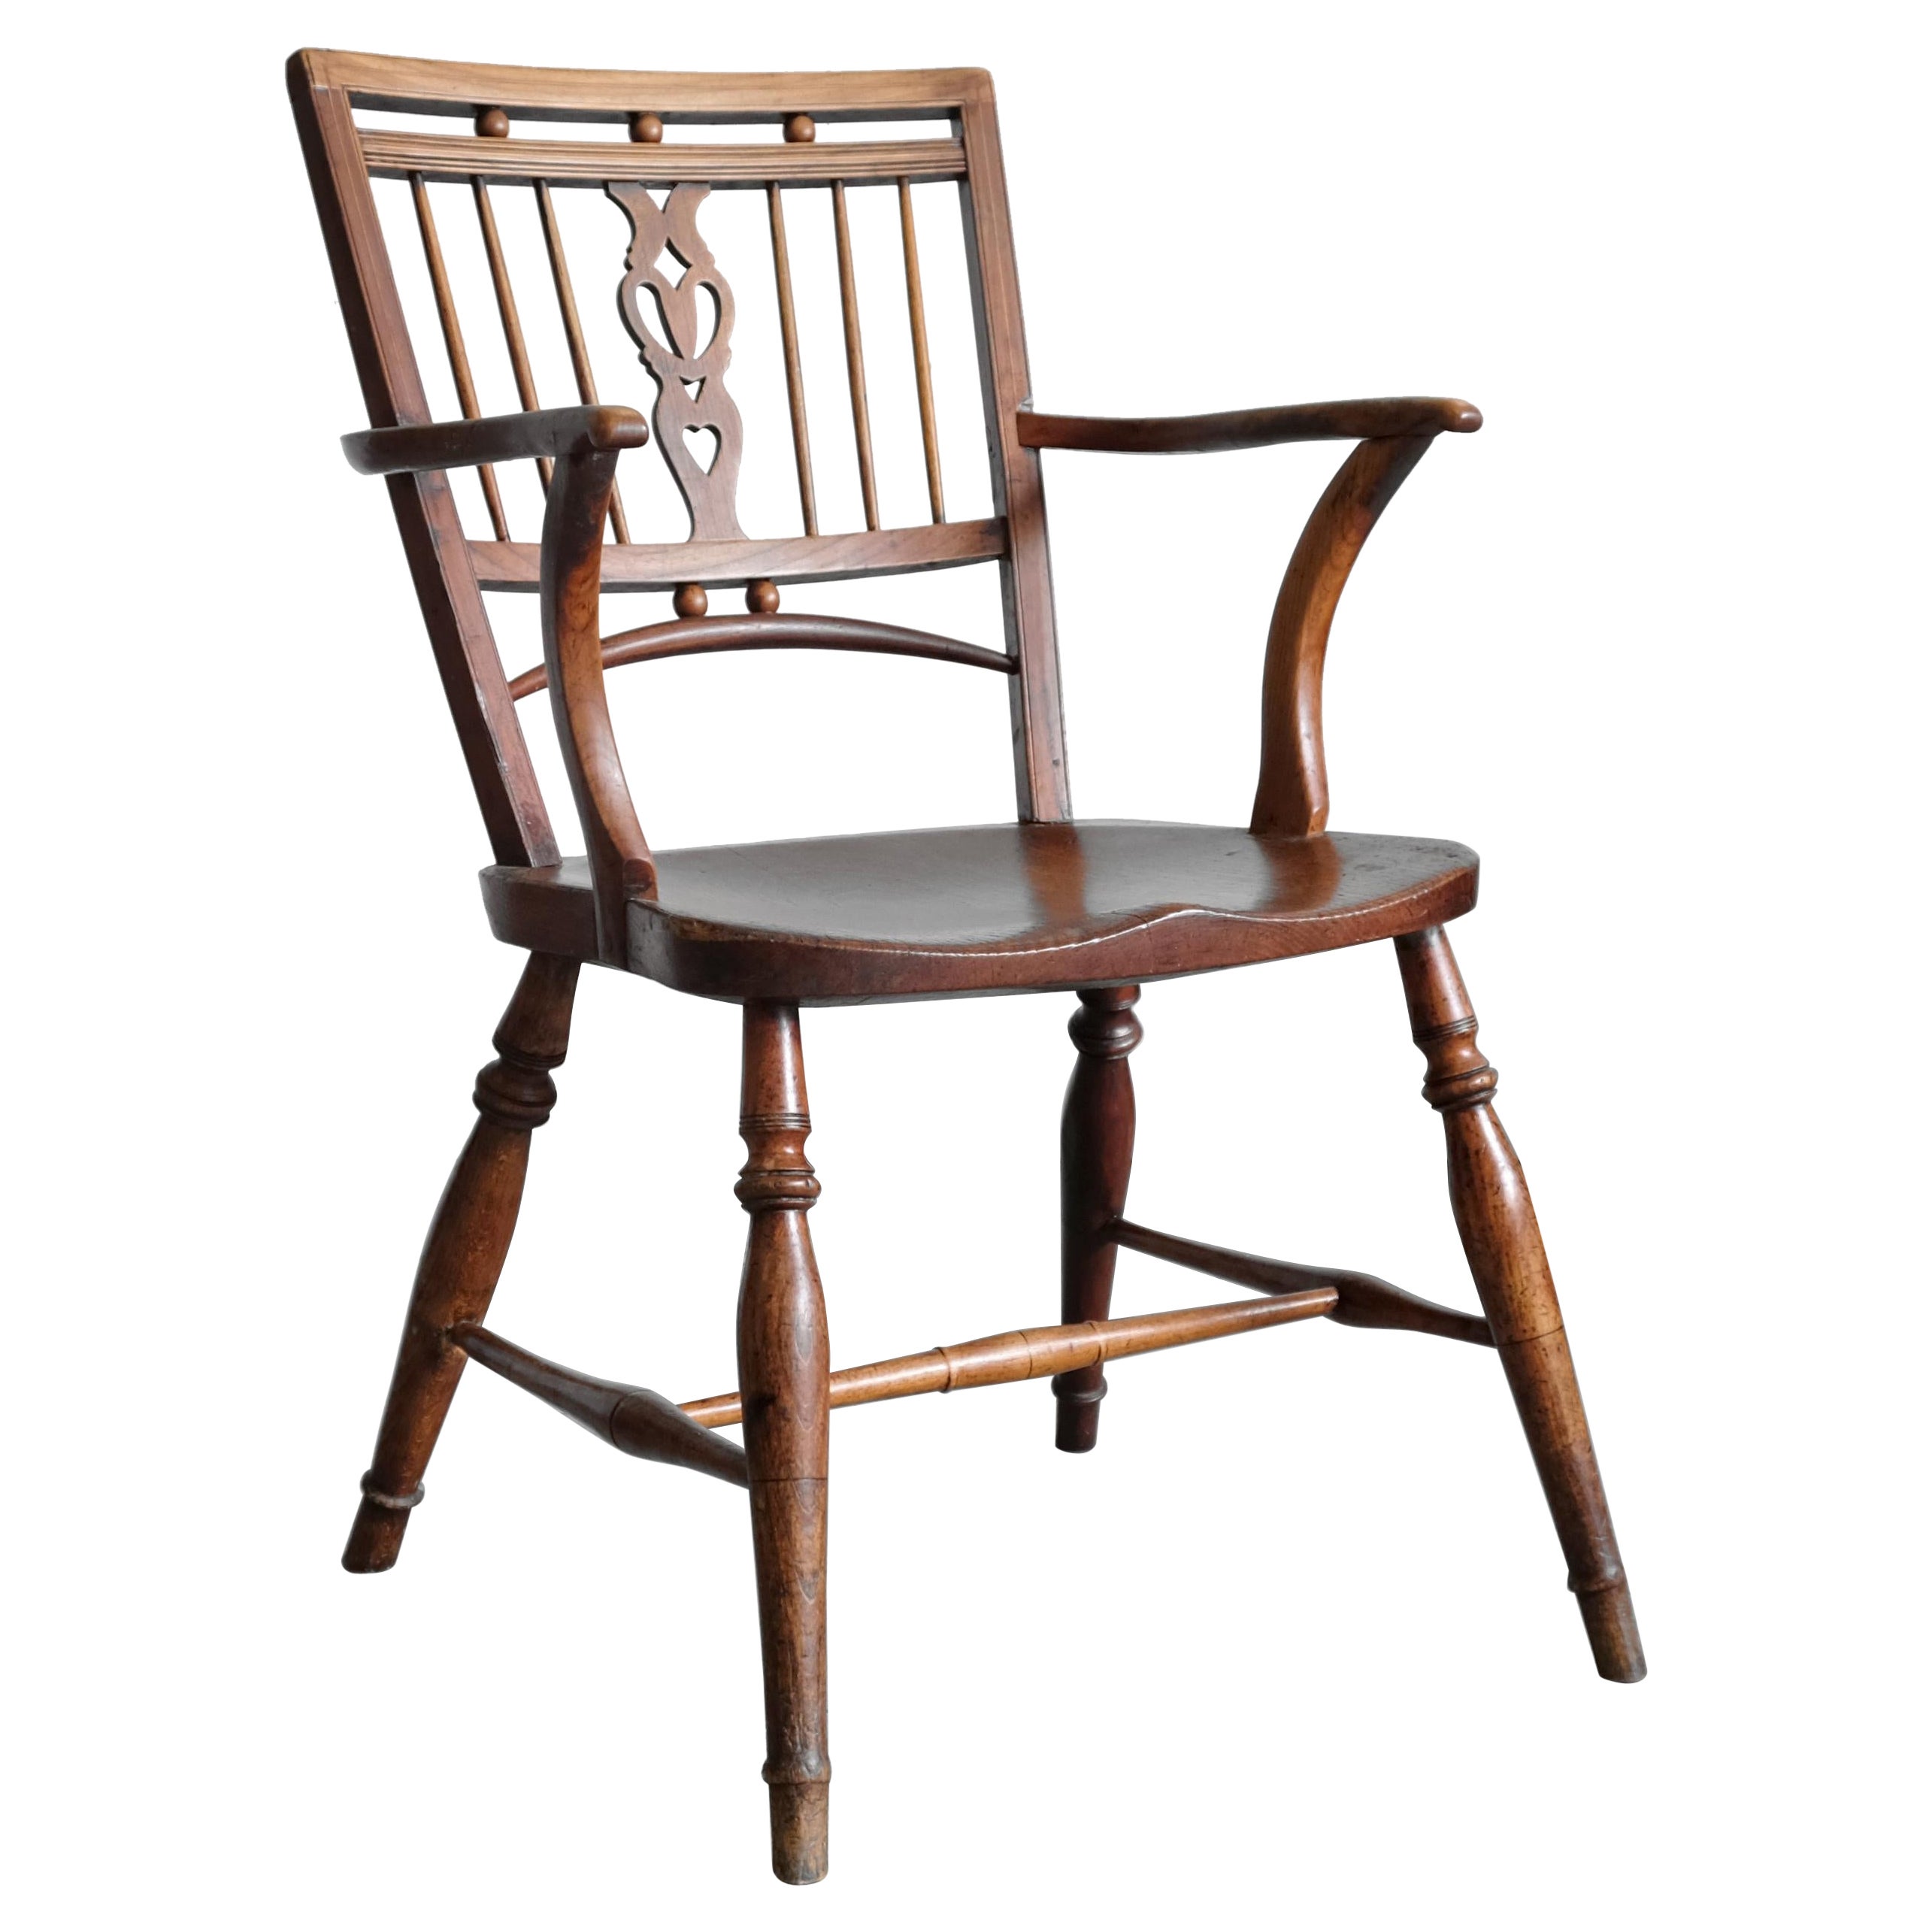 English Mendlesham Windsor Armchair, Country Chair, Fruitwood, Elm, 19th Century